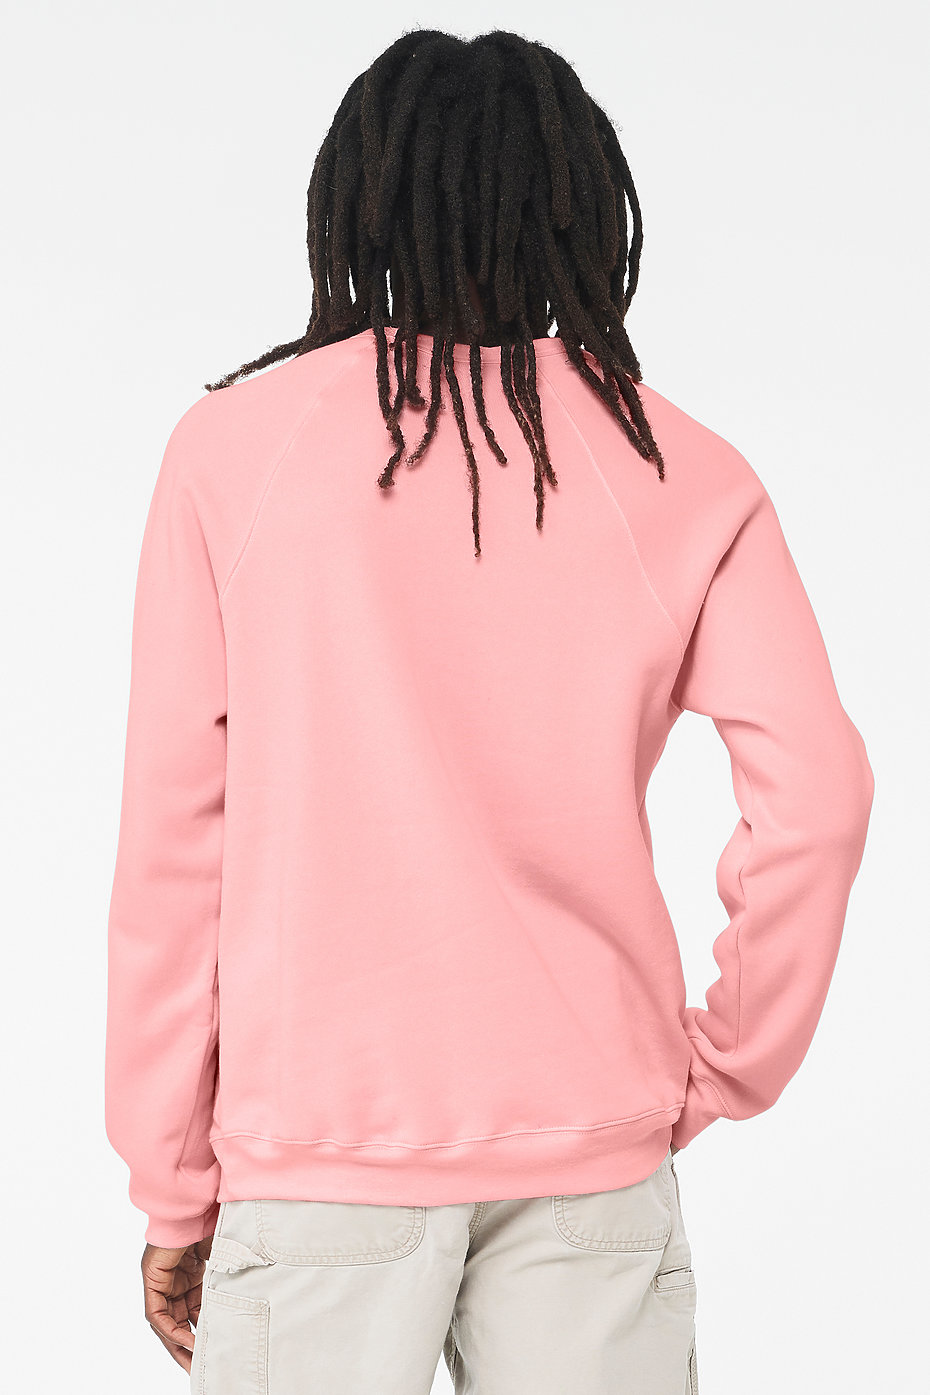 XtraFly Apparel Men's Active Plain Basic Crewneck Short Sleeve T-shirt  Light Pink